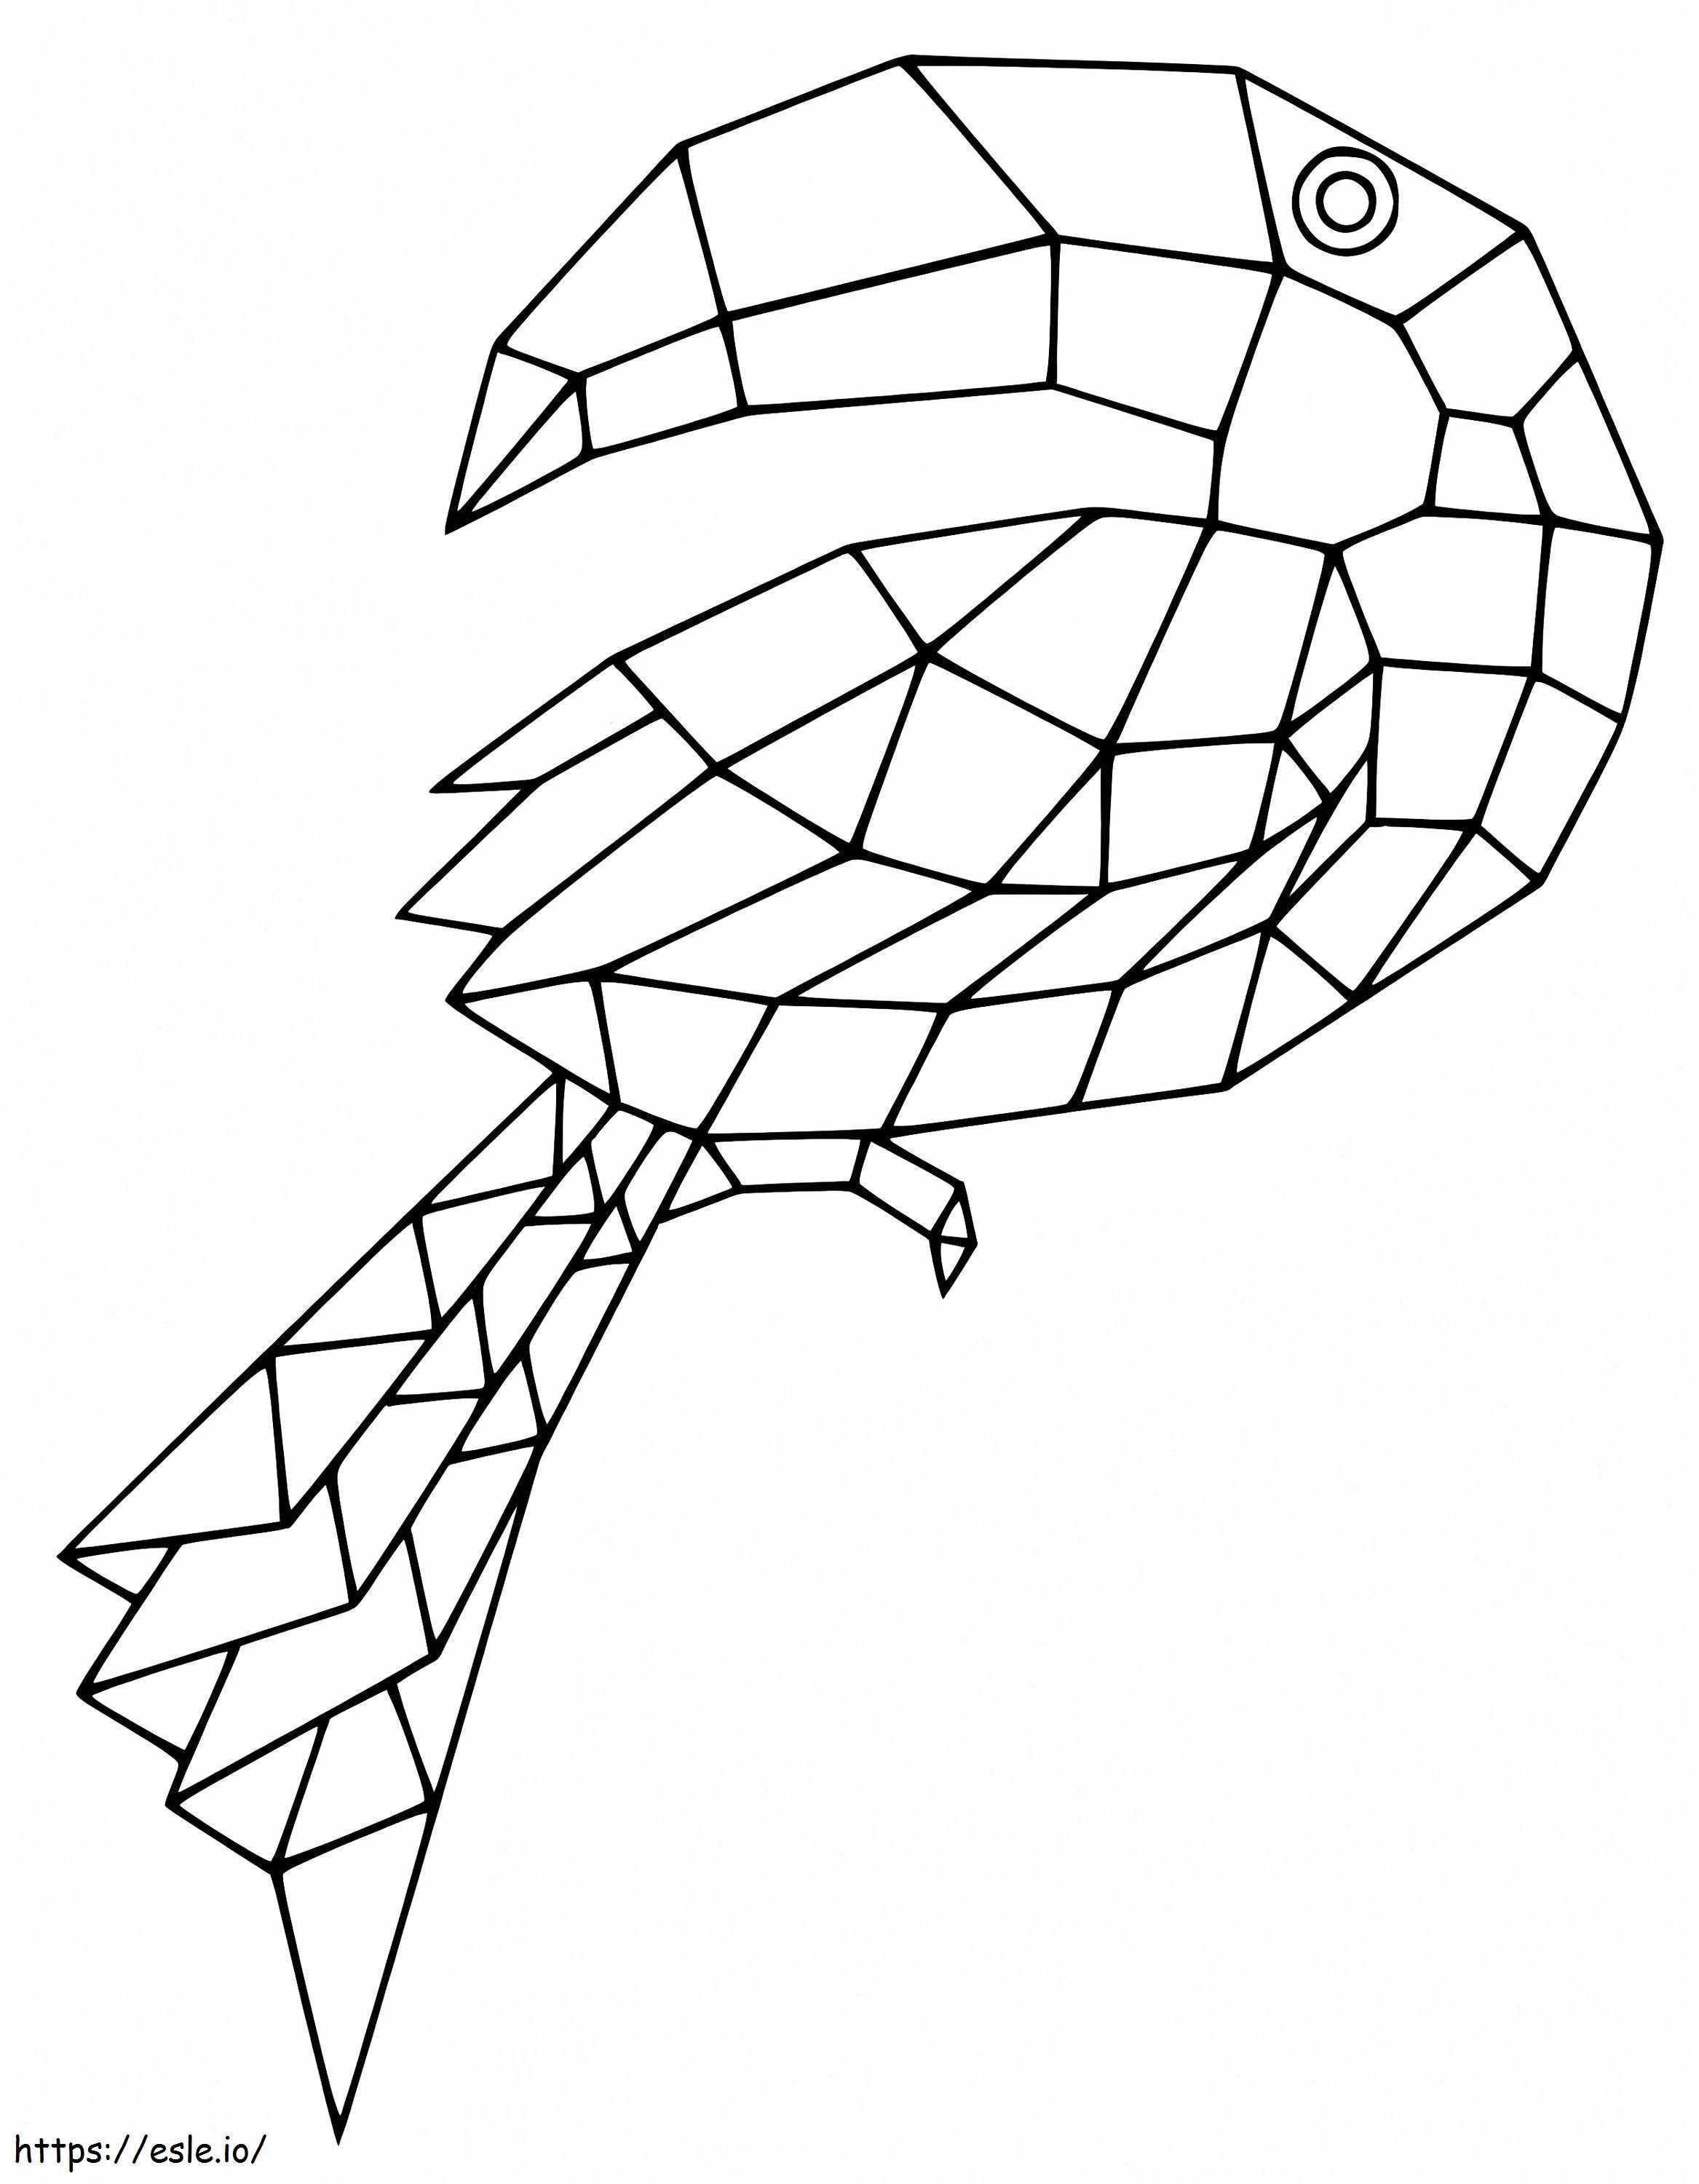 Origami-Nashornvogel 1 ausmalbilder